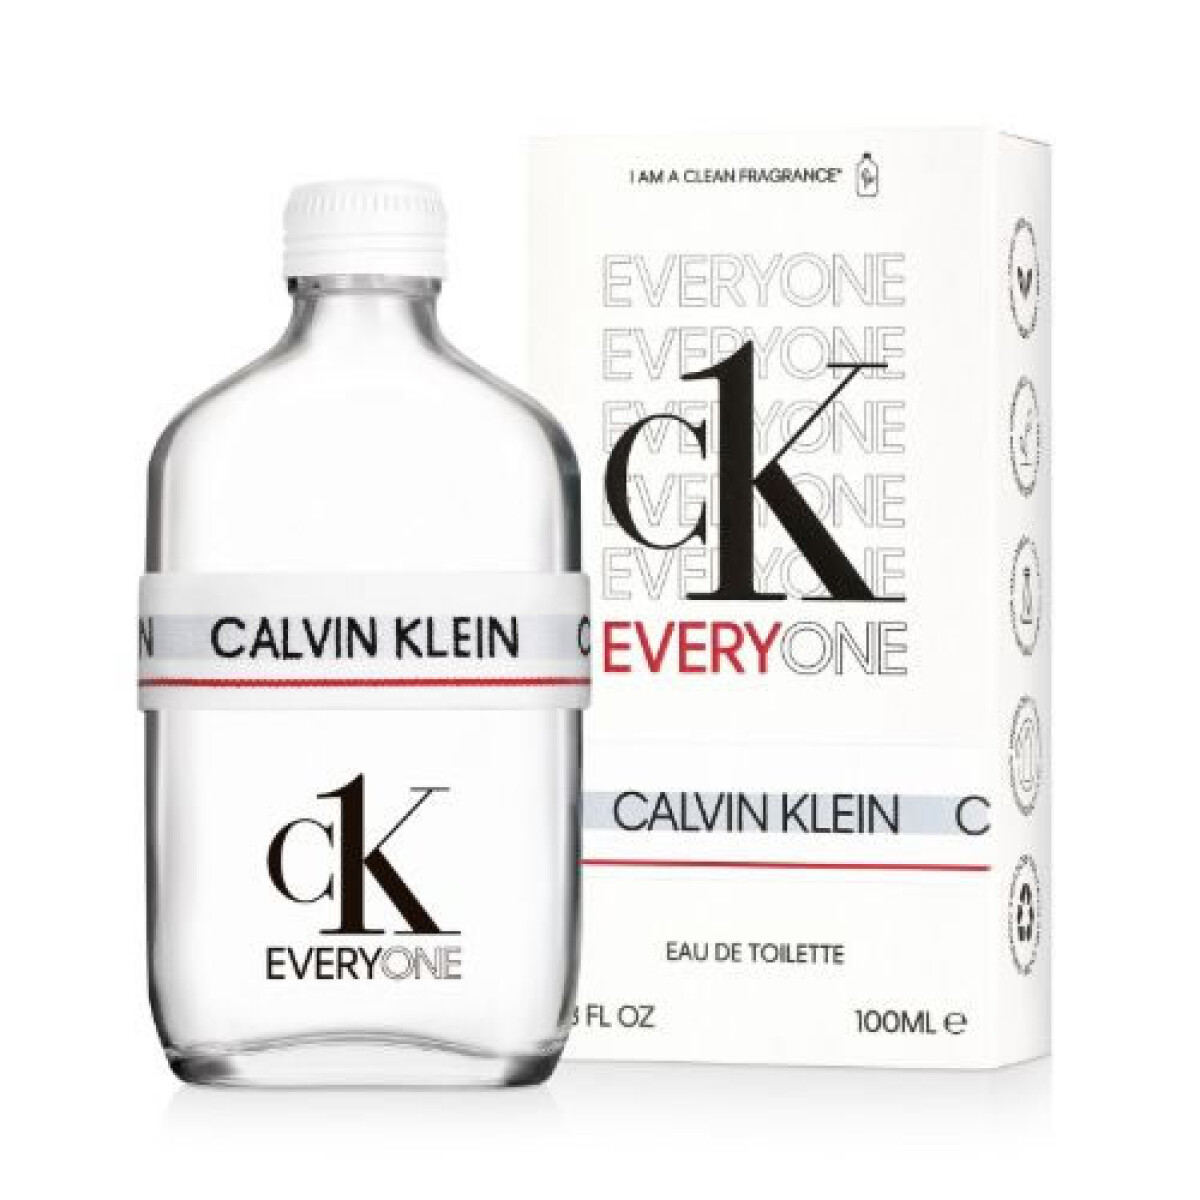 PERFUME EVERYONE 100 ML CALVIN KLEIN 